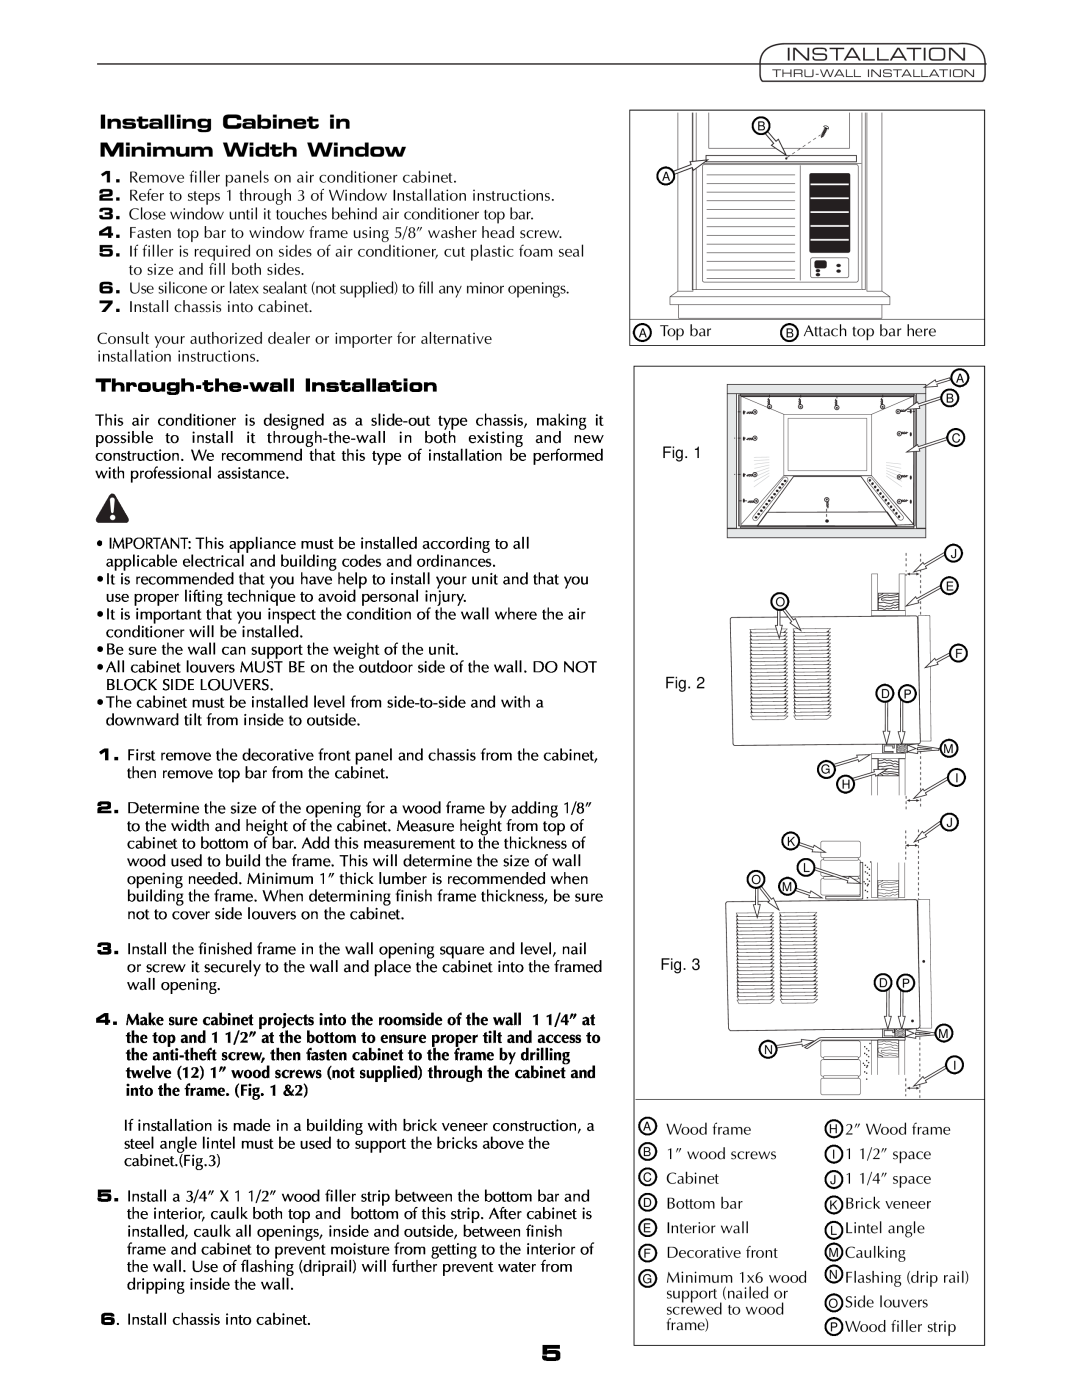 Fedders AEY08F2B important safety instructions Installing Cabinet in Minimum Width Window, Through-the-wallInstallation 